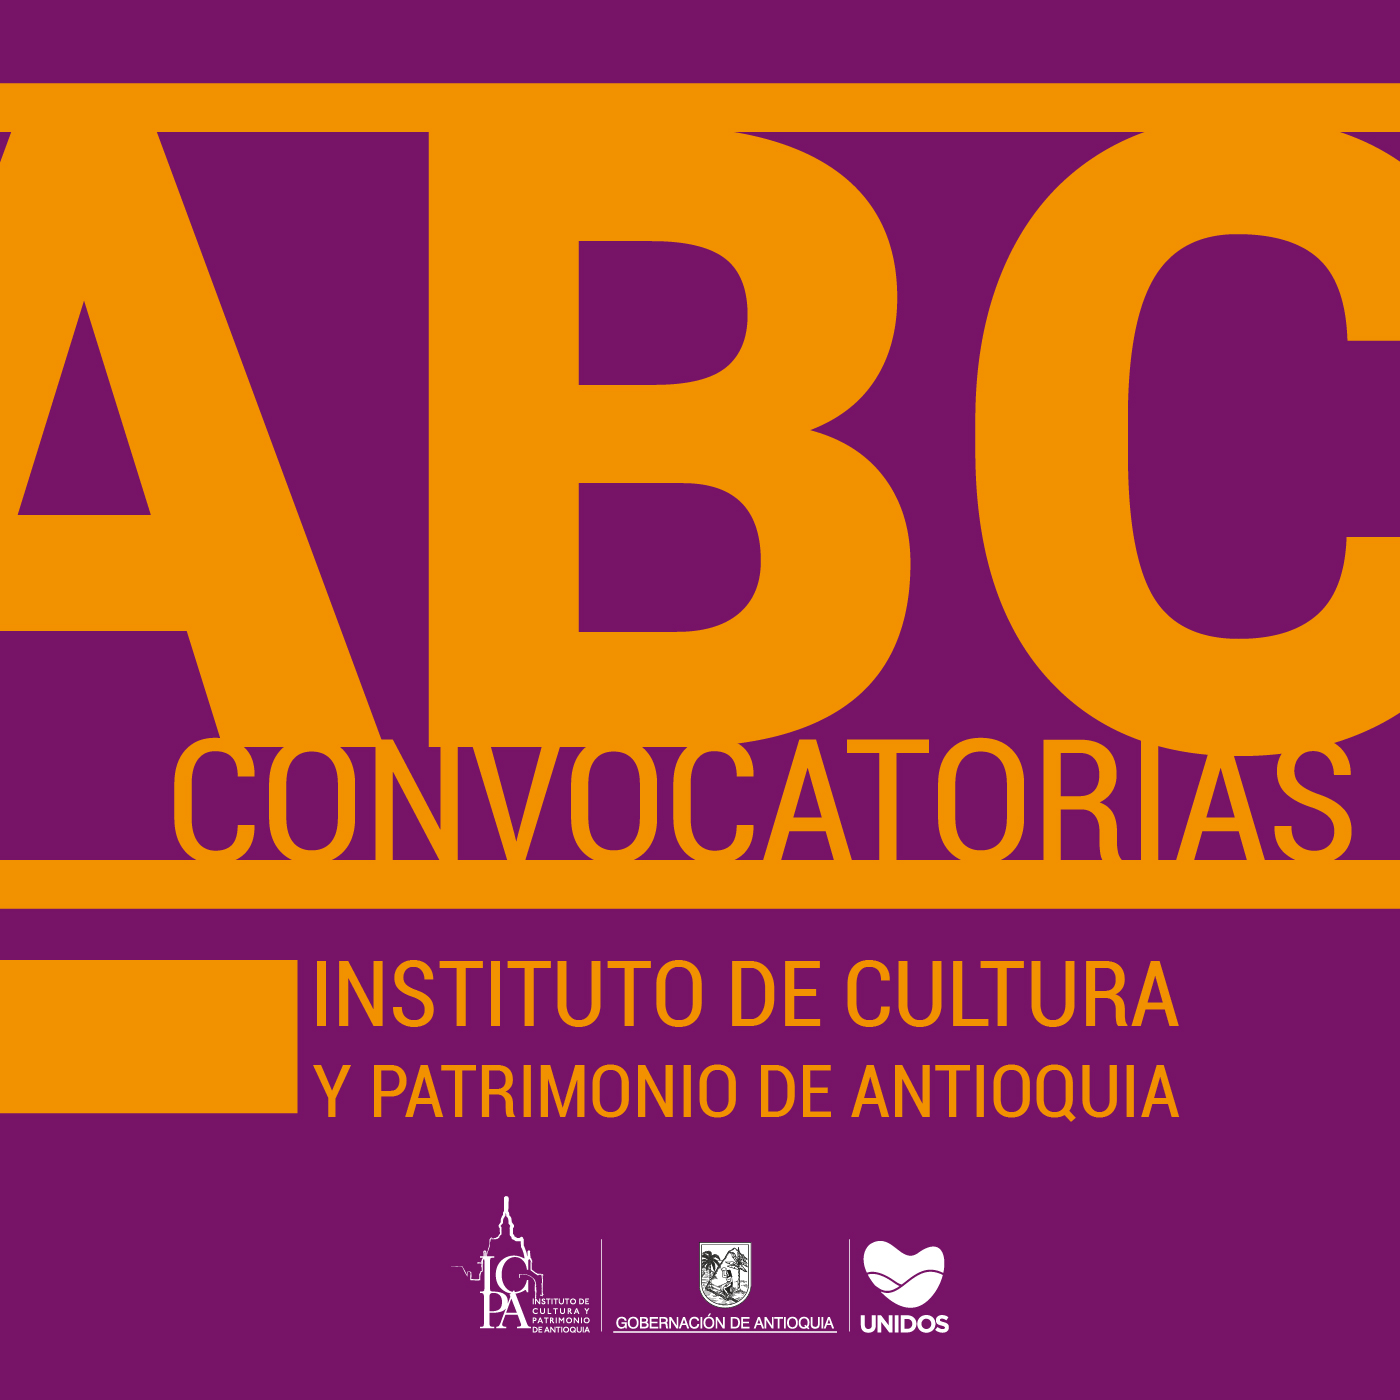 ABC Convocatorias - Carrusel_1